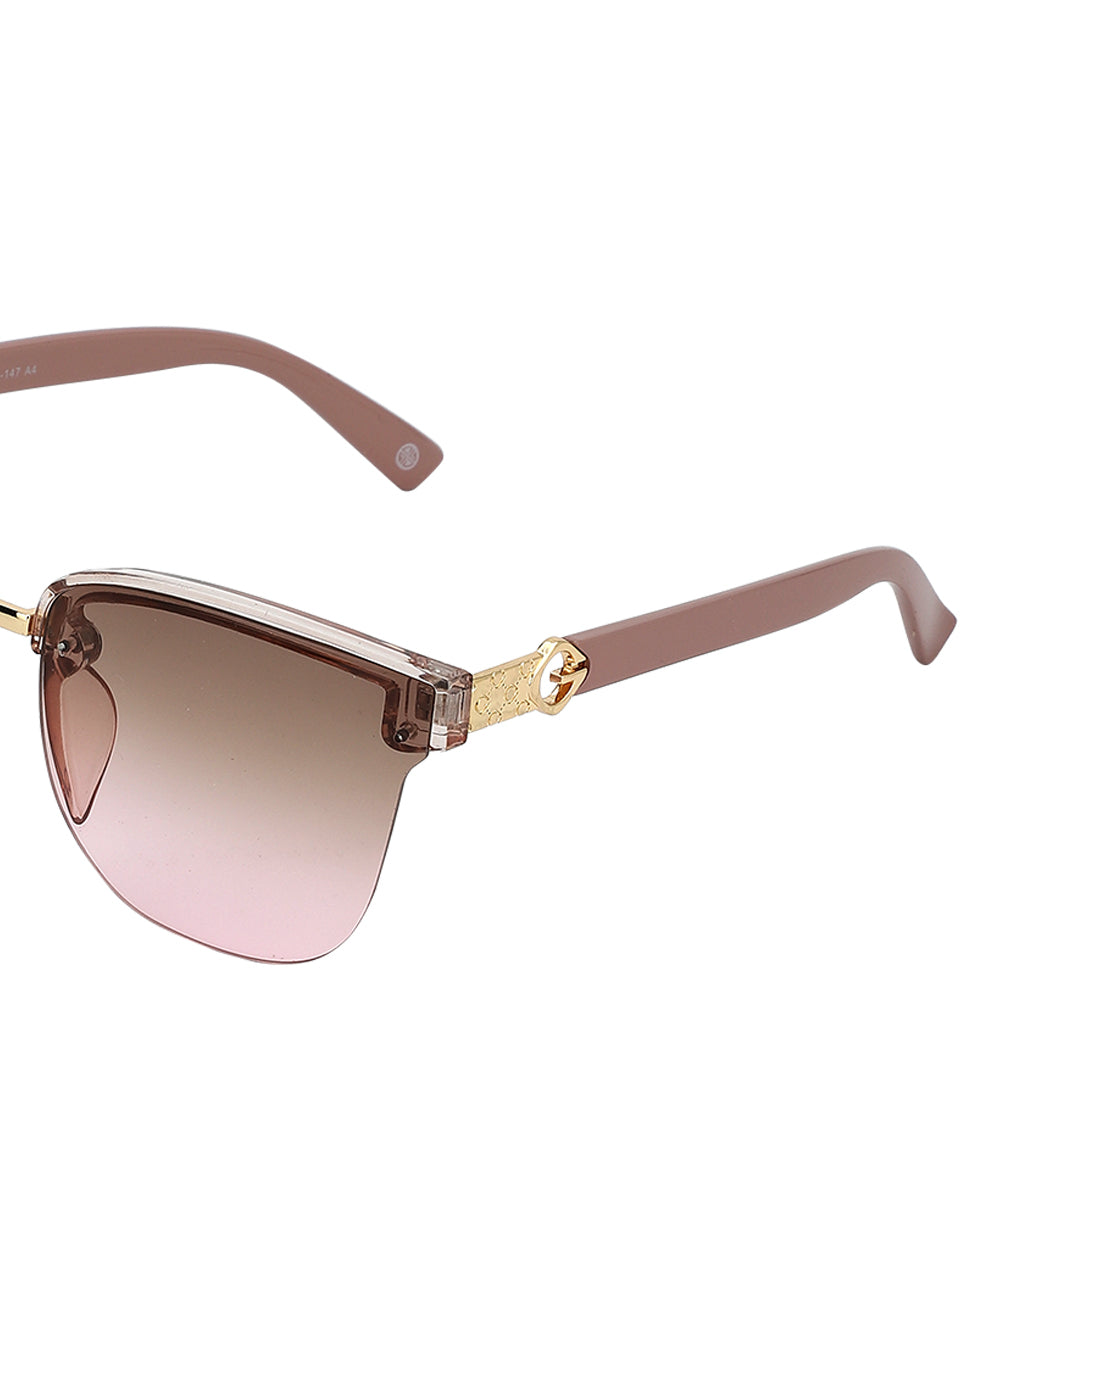 White Sunglasses Women - Buy White Sunglasses Women online in India